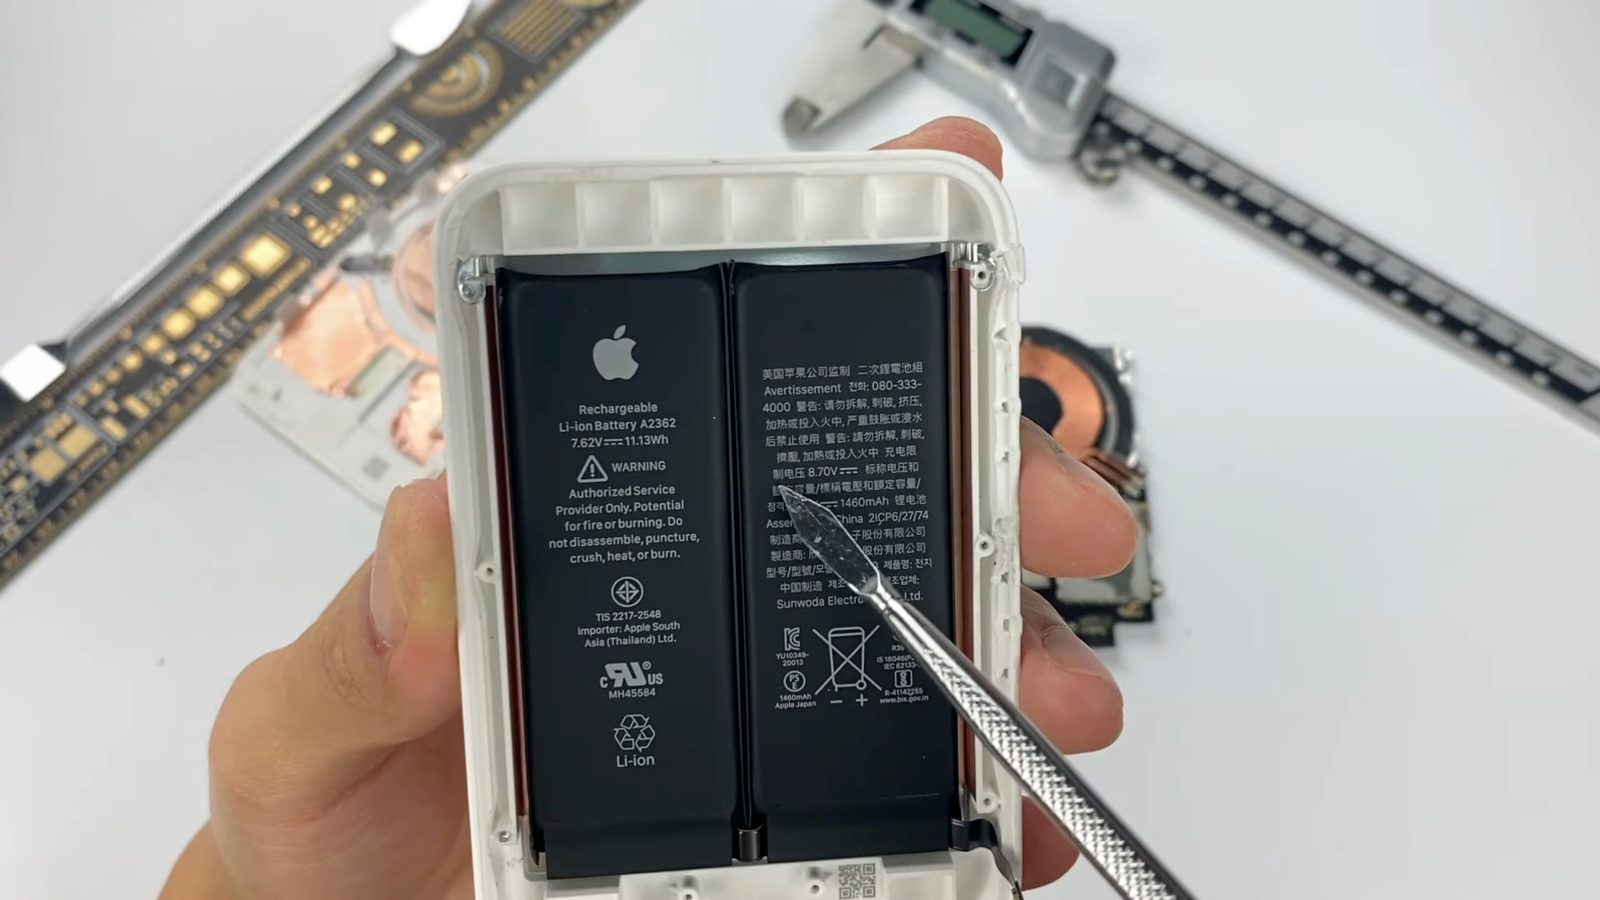 Teardown reveals MagSafe Battery Pack's internal design - 9to5Mac